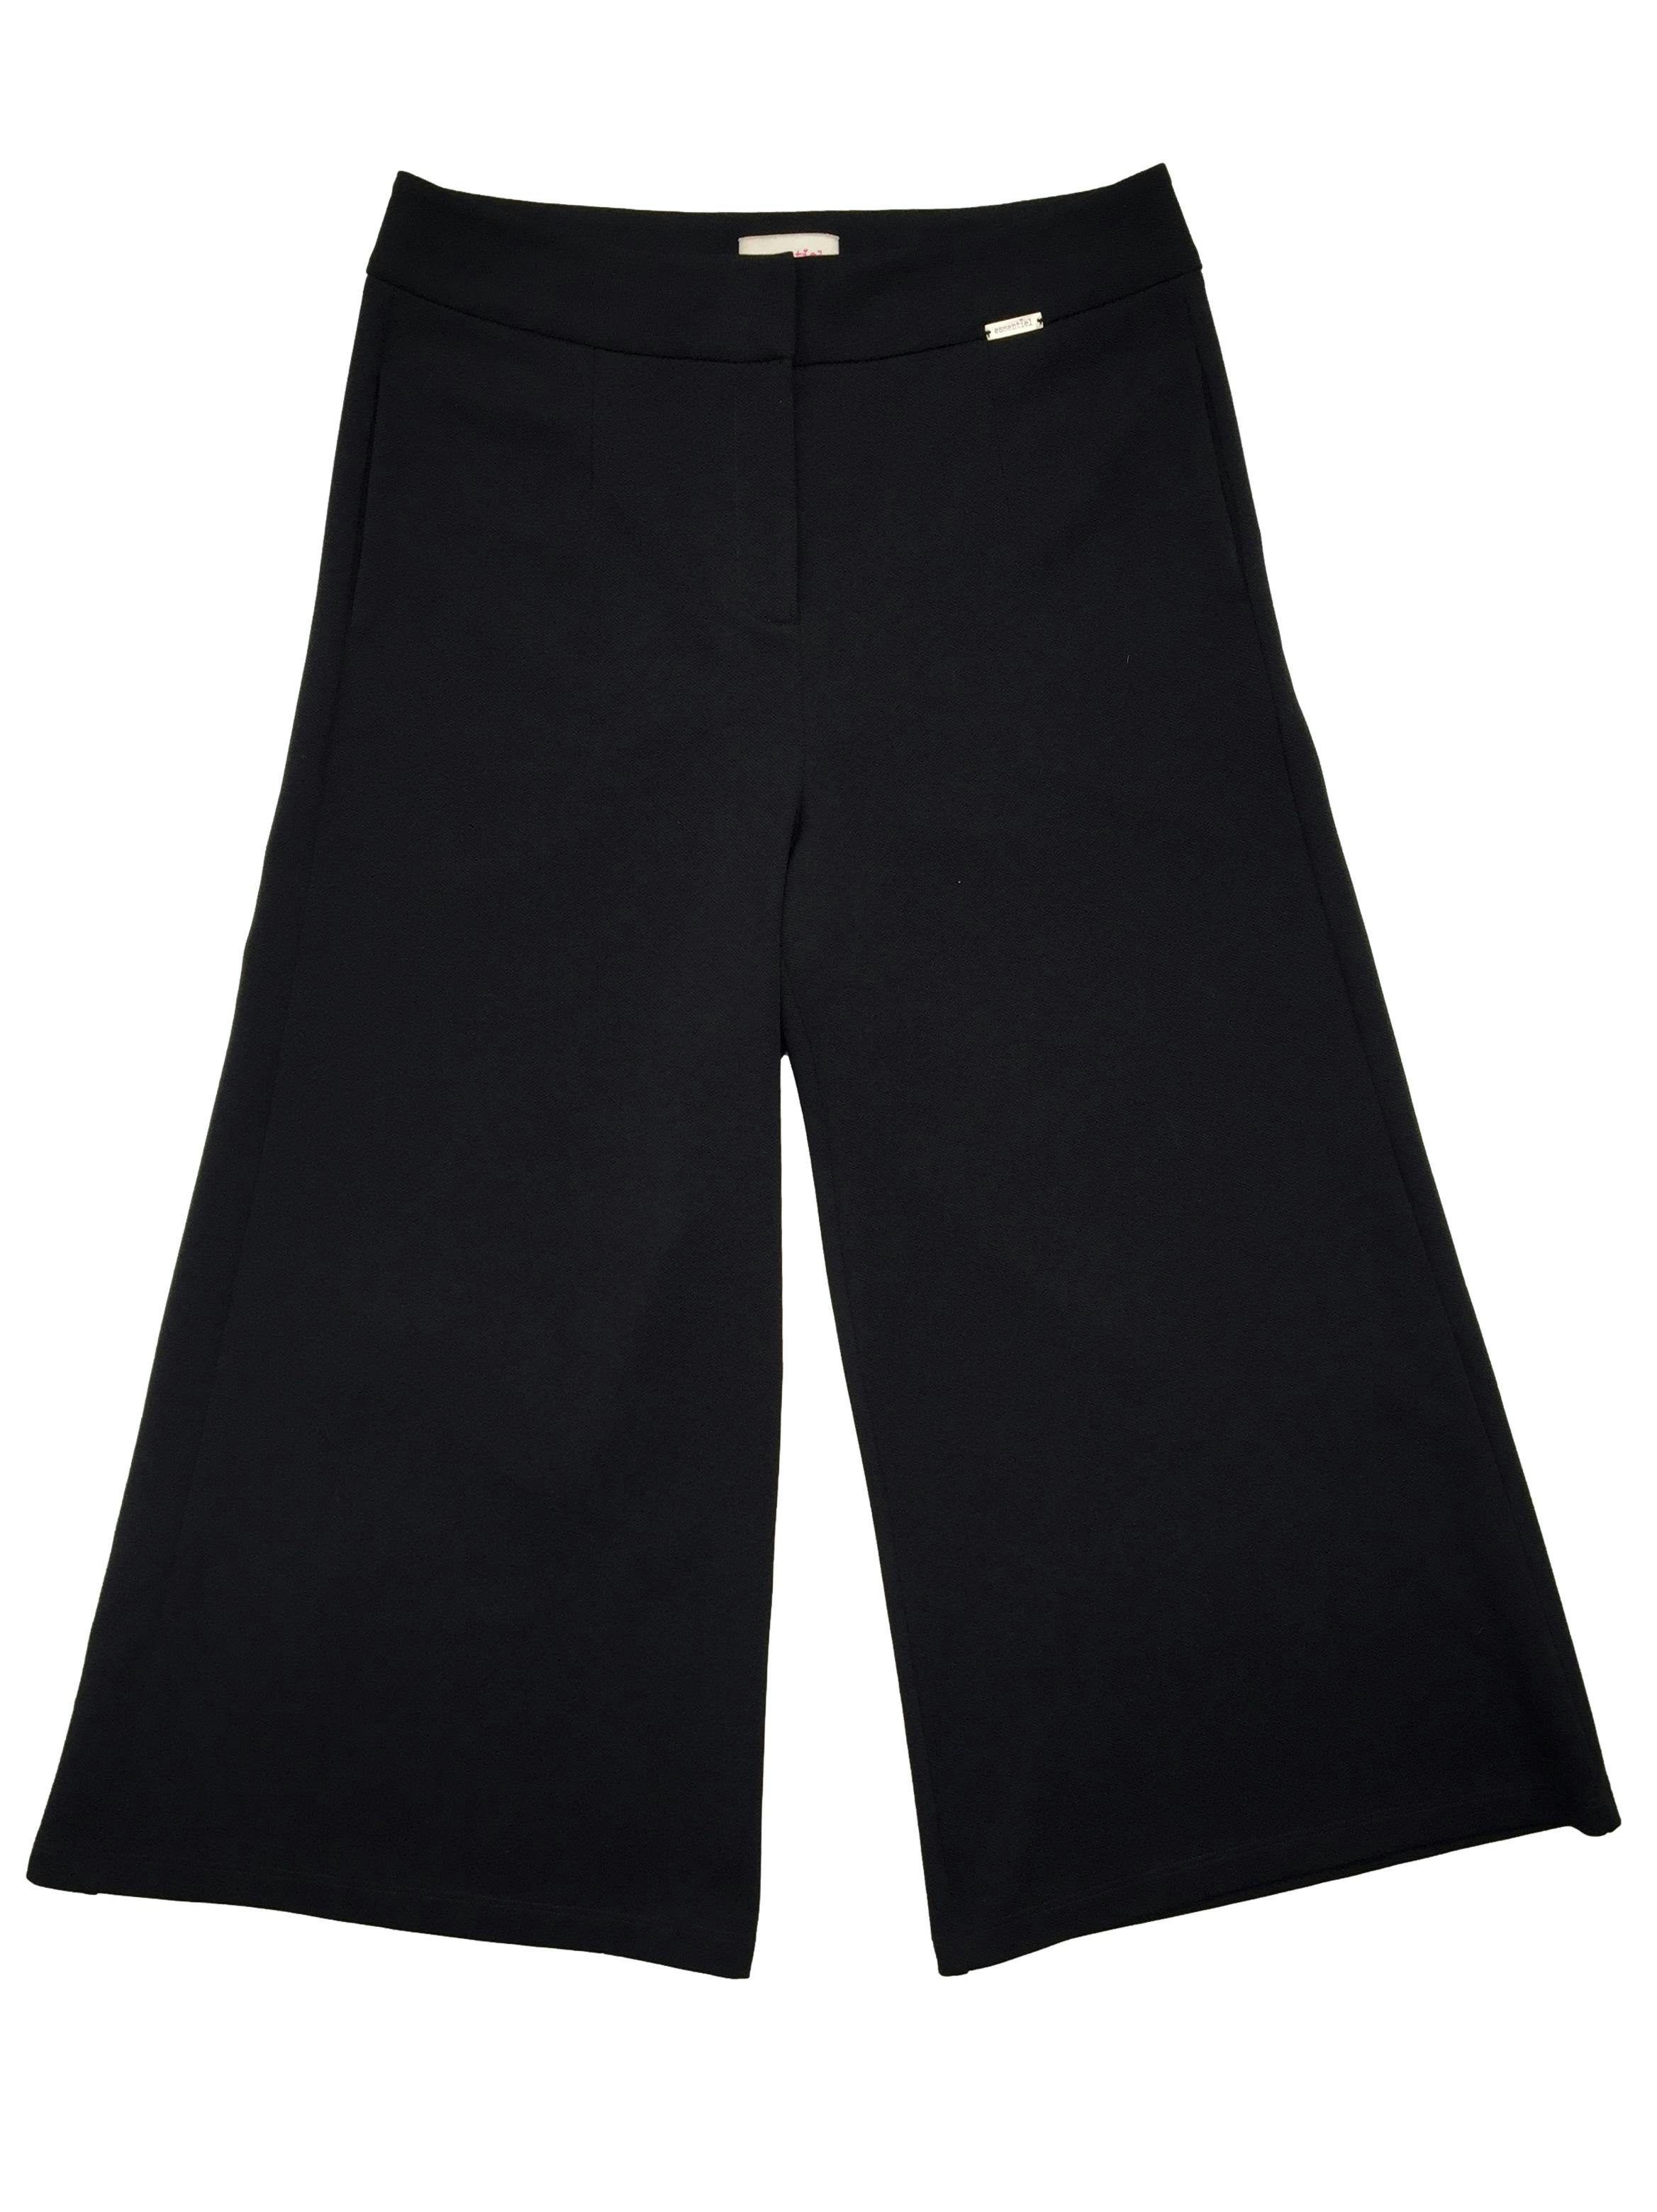 Pantalón capri Essientel color negro. Cintura 80 cm, Tiro 30 cm, Largo 82 cm.